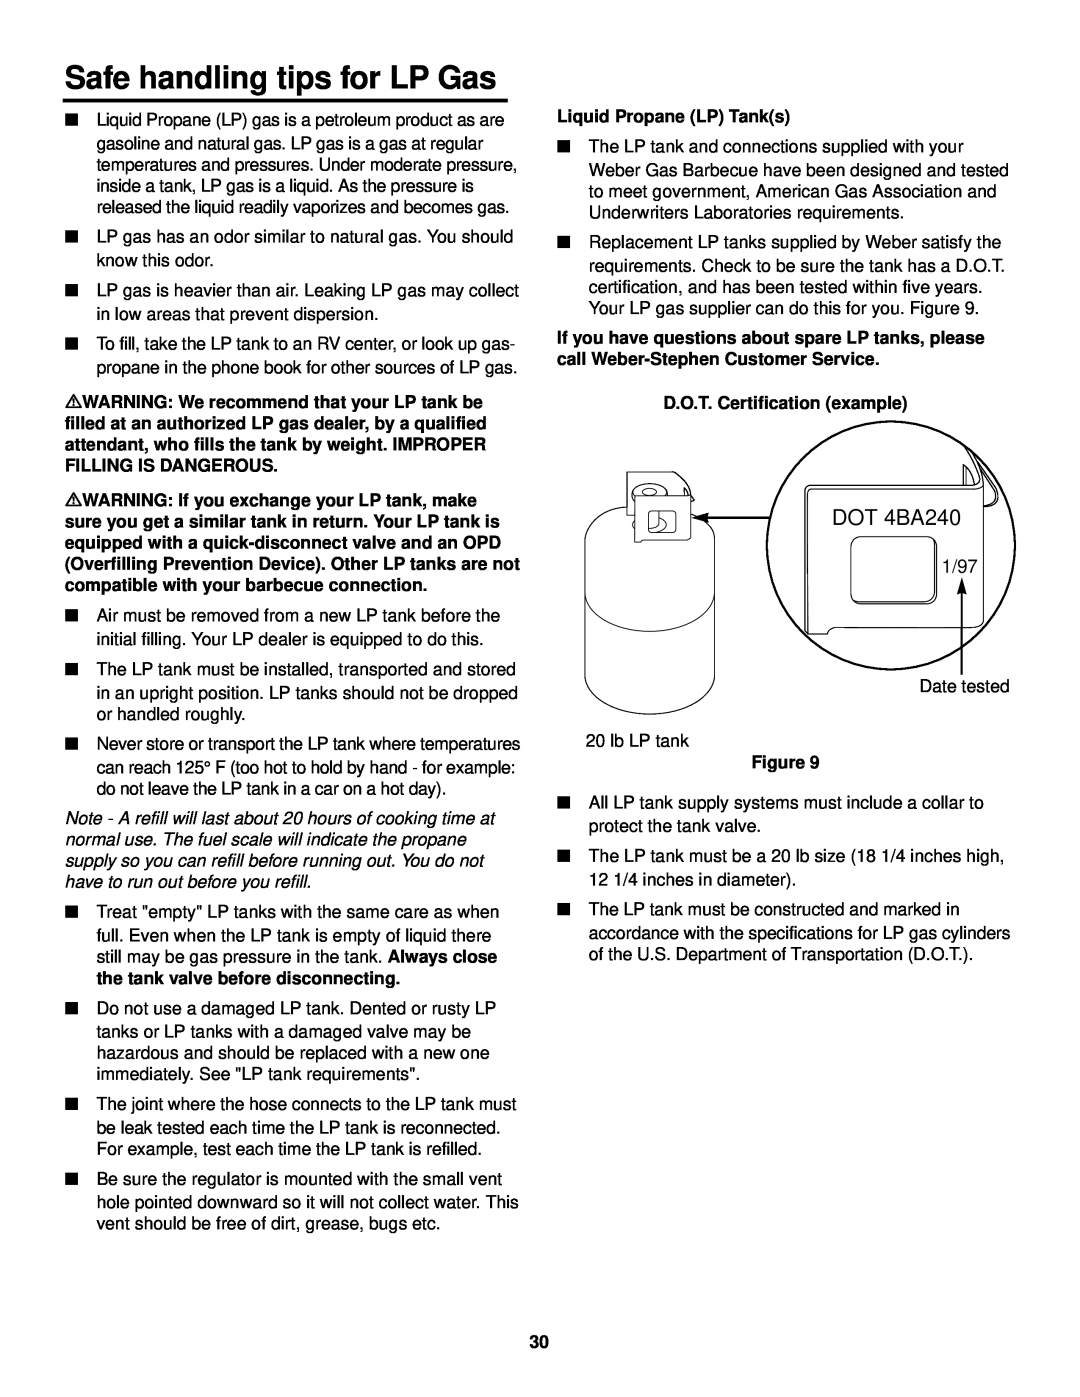 Weber 3000 LX owner manual Safe handling tips for LP Gas, 1/97, Liquid Propane LP Tanks, D.O.T. Certification example 